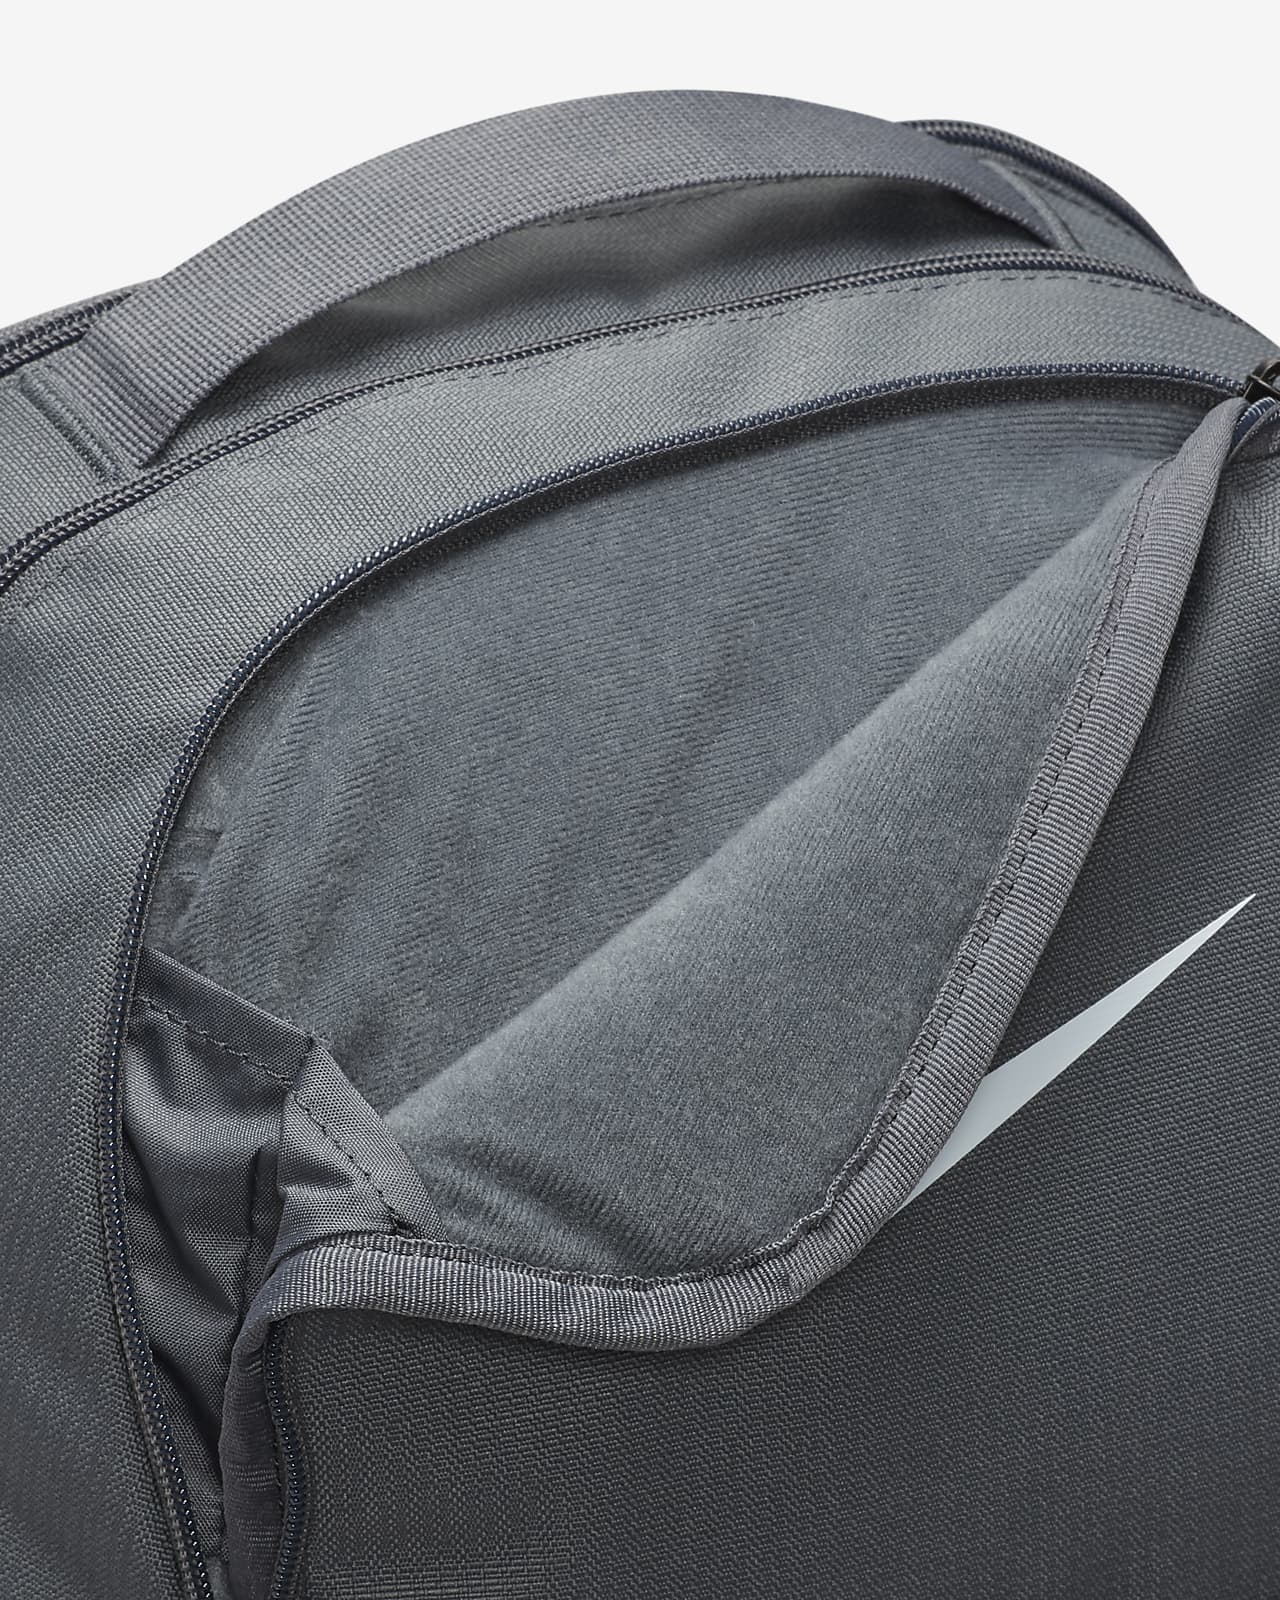 LB Brasilia Backpack - Black, Nike – Long Beach State Official Store